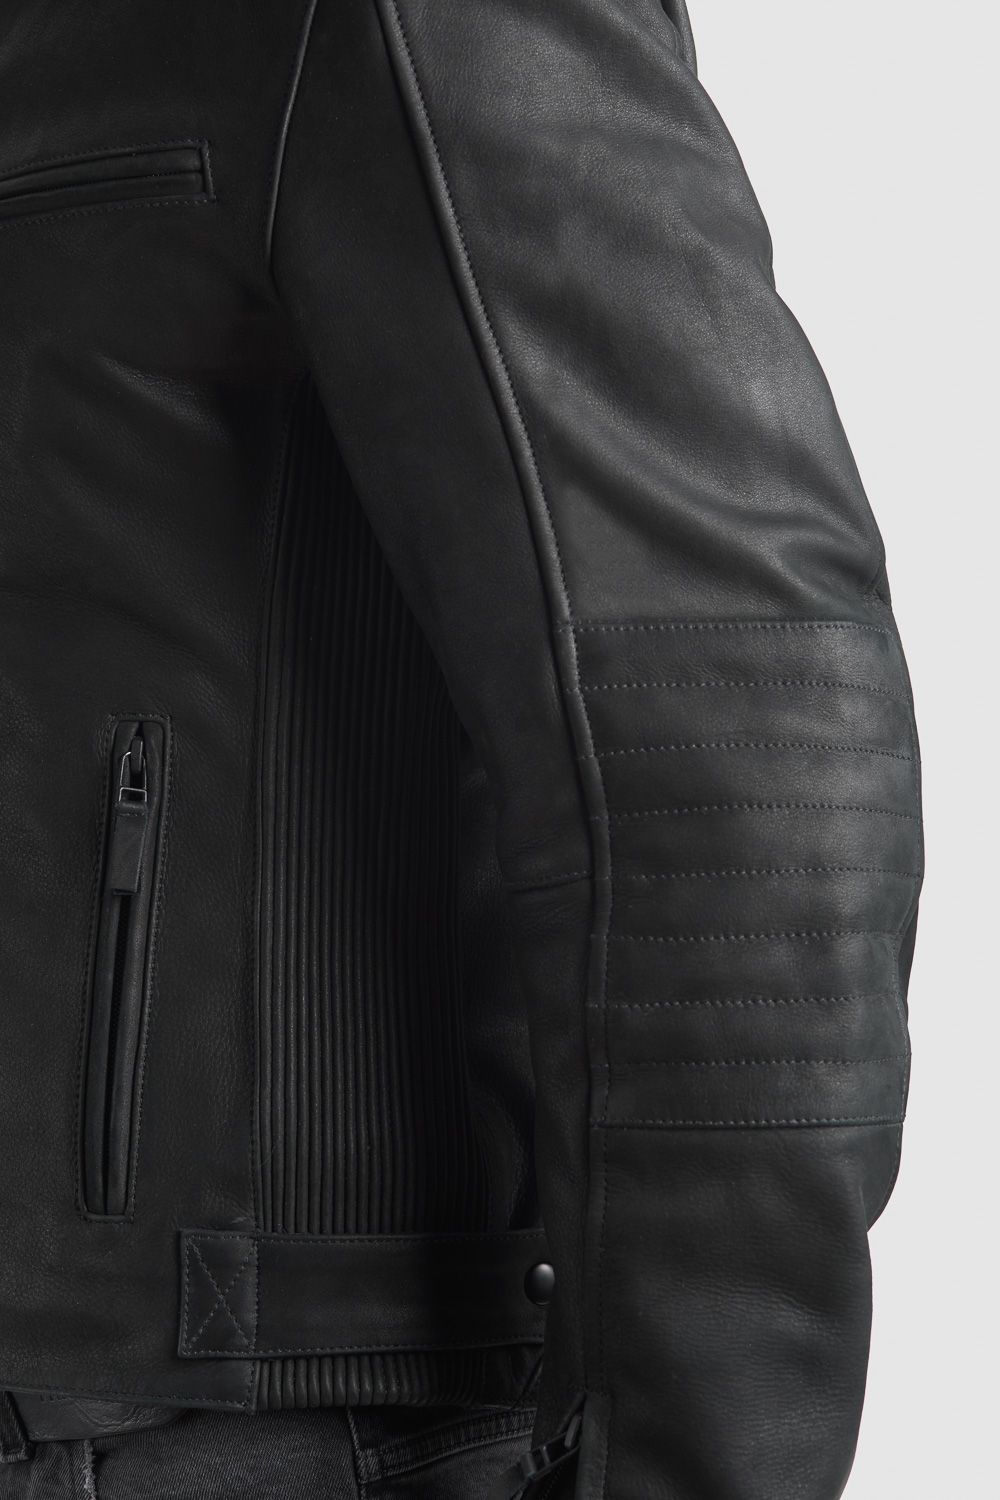 TATAMI LT 01 – Men’s Leather Motorcycle Jacket 5